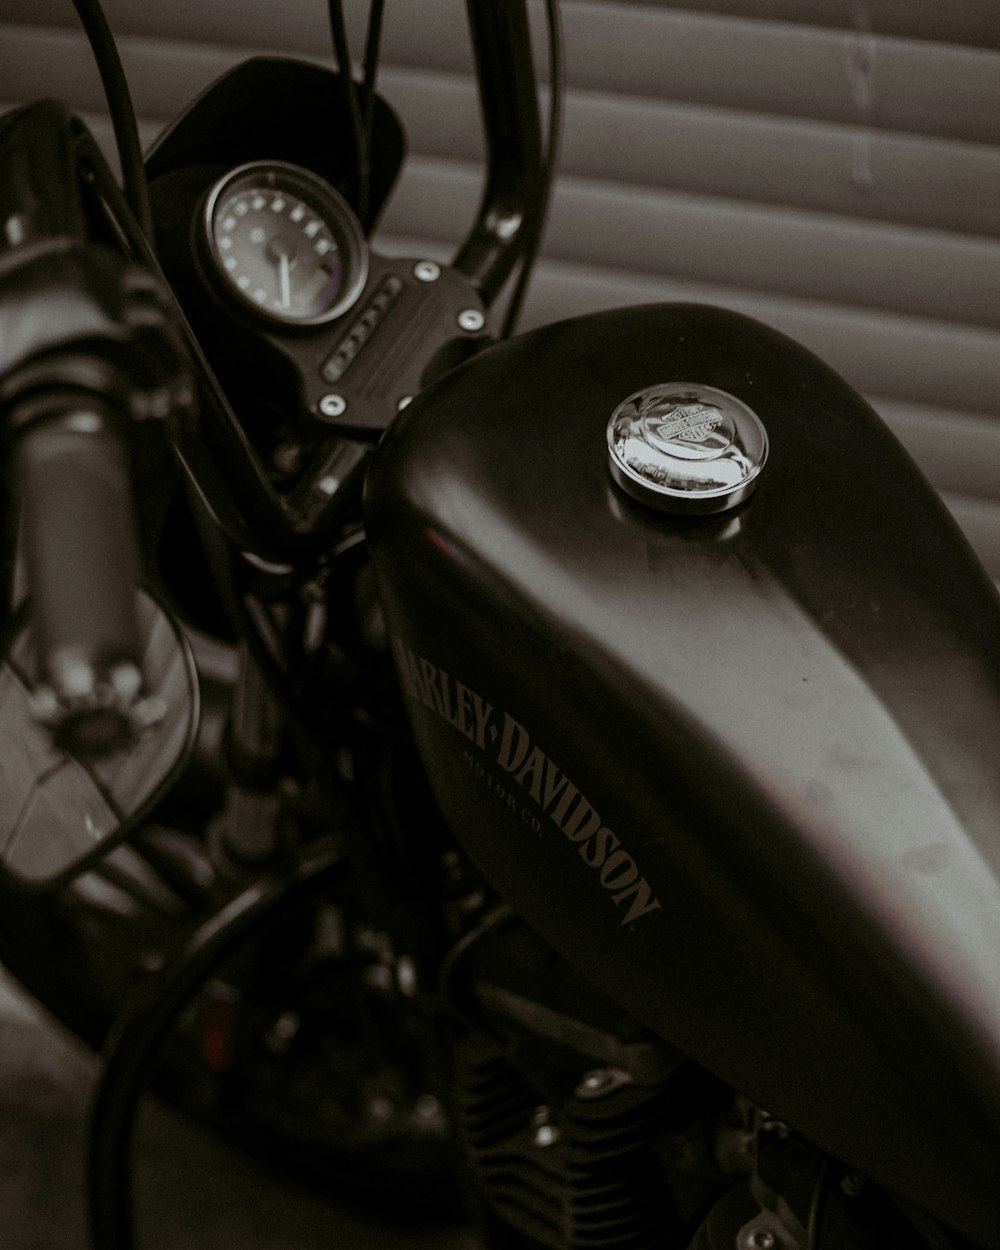 Motocicletta Harley Davidson nera e grigia